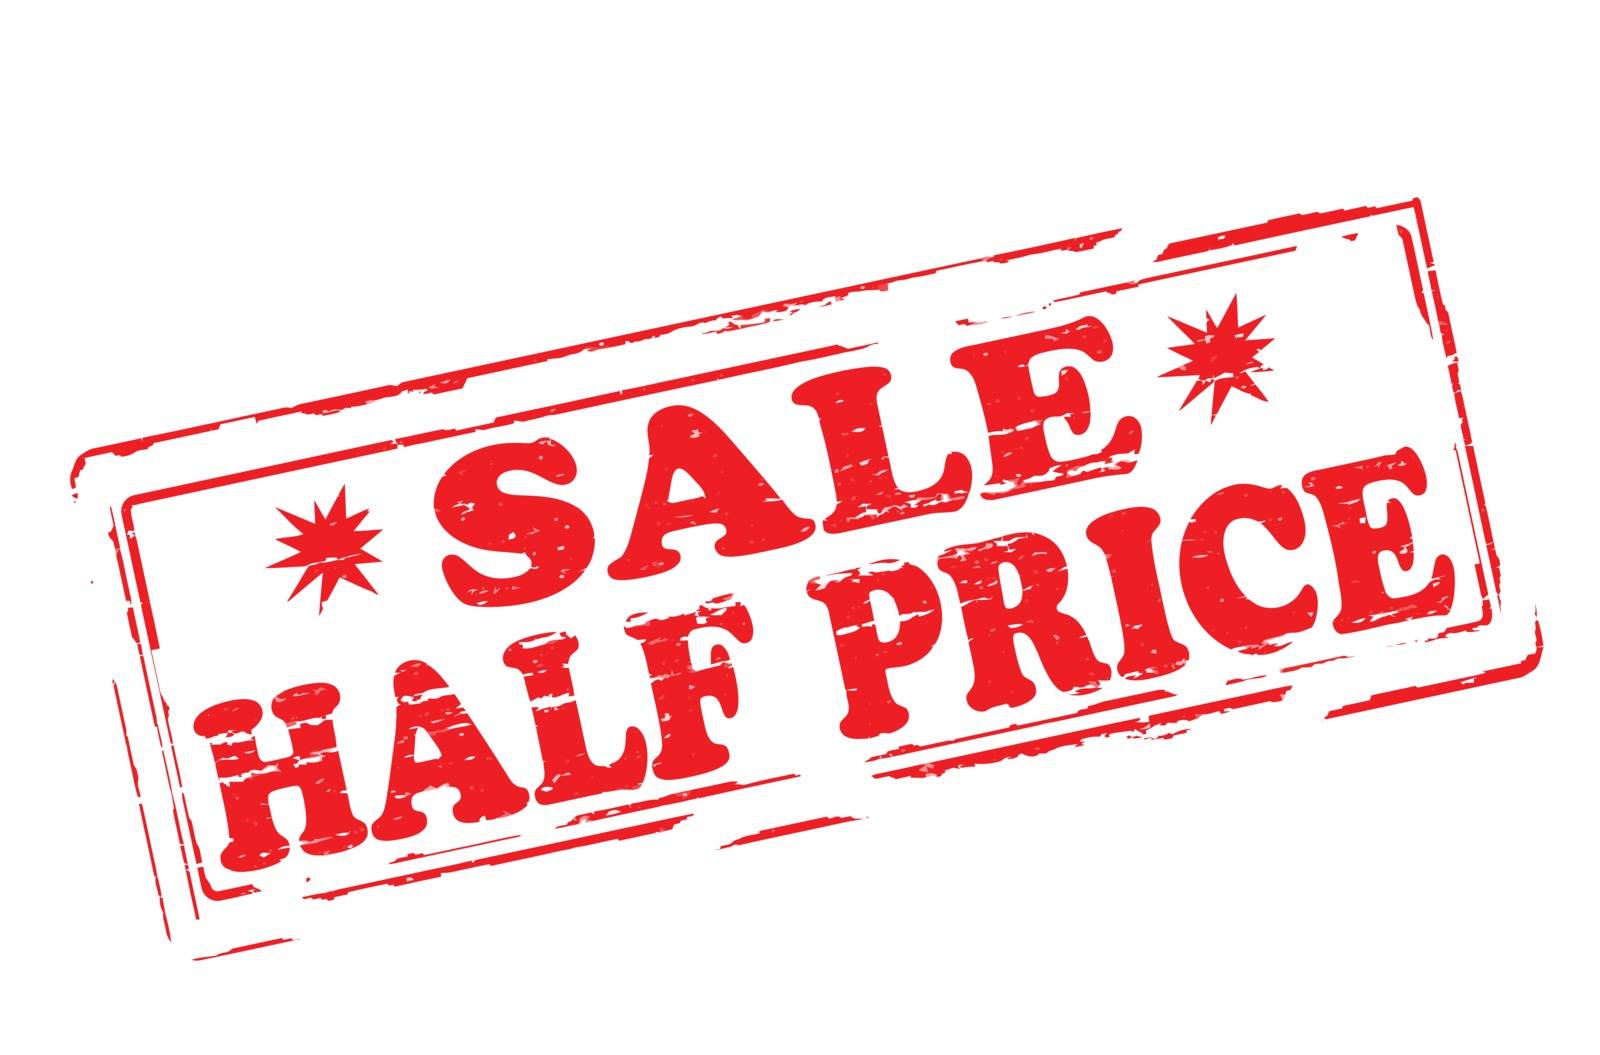 Sale half price by carmenbobo